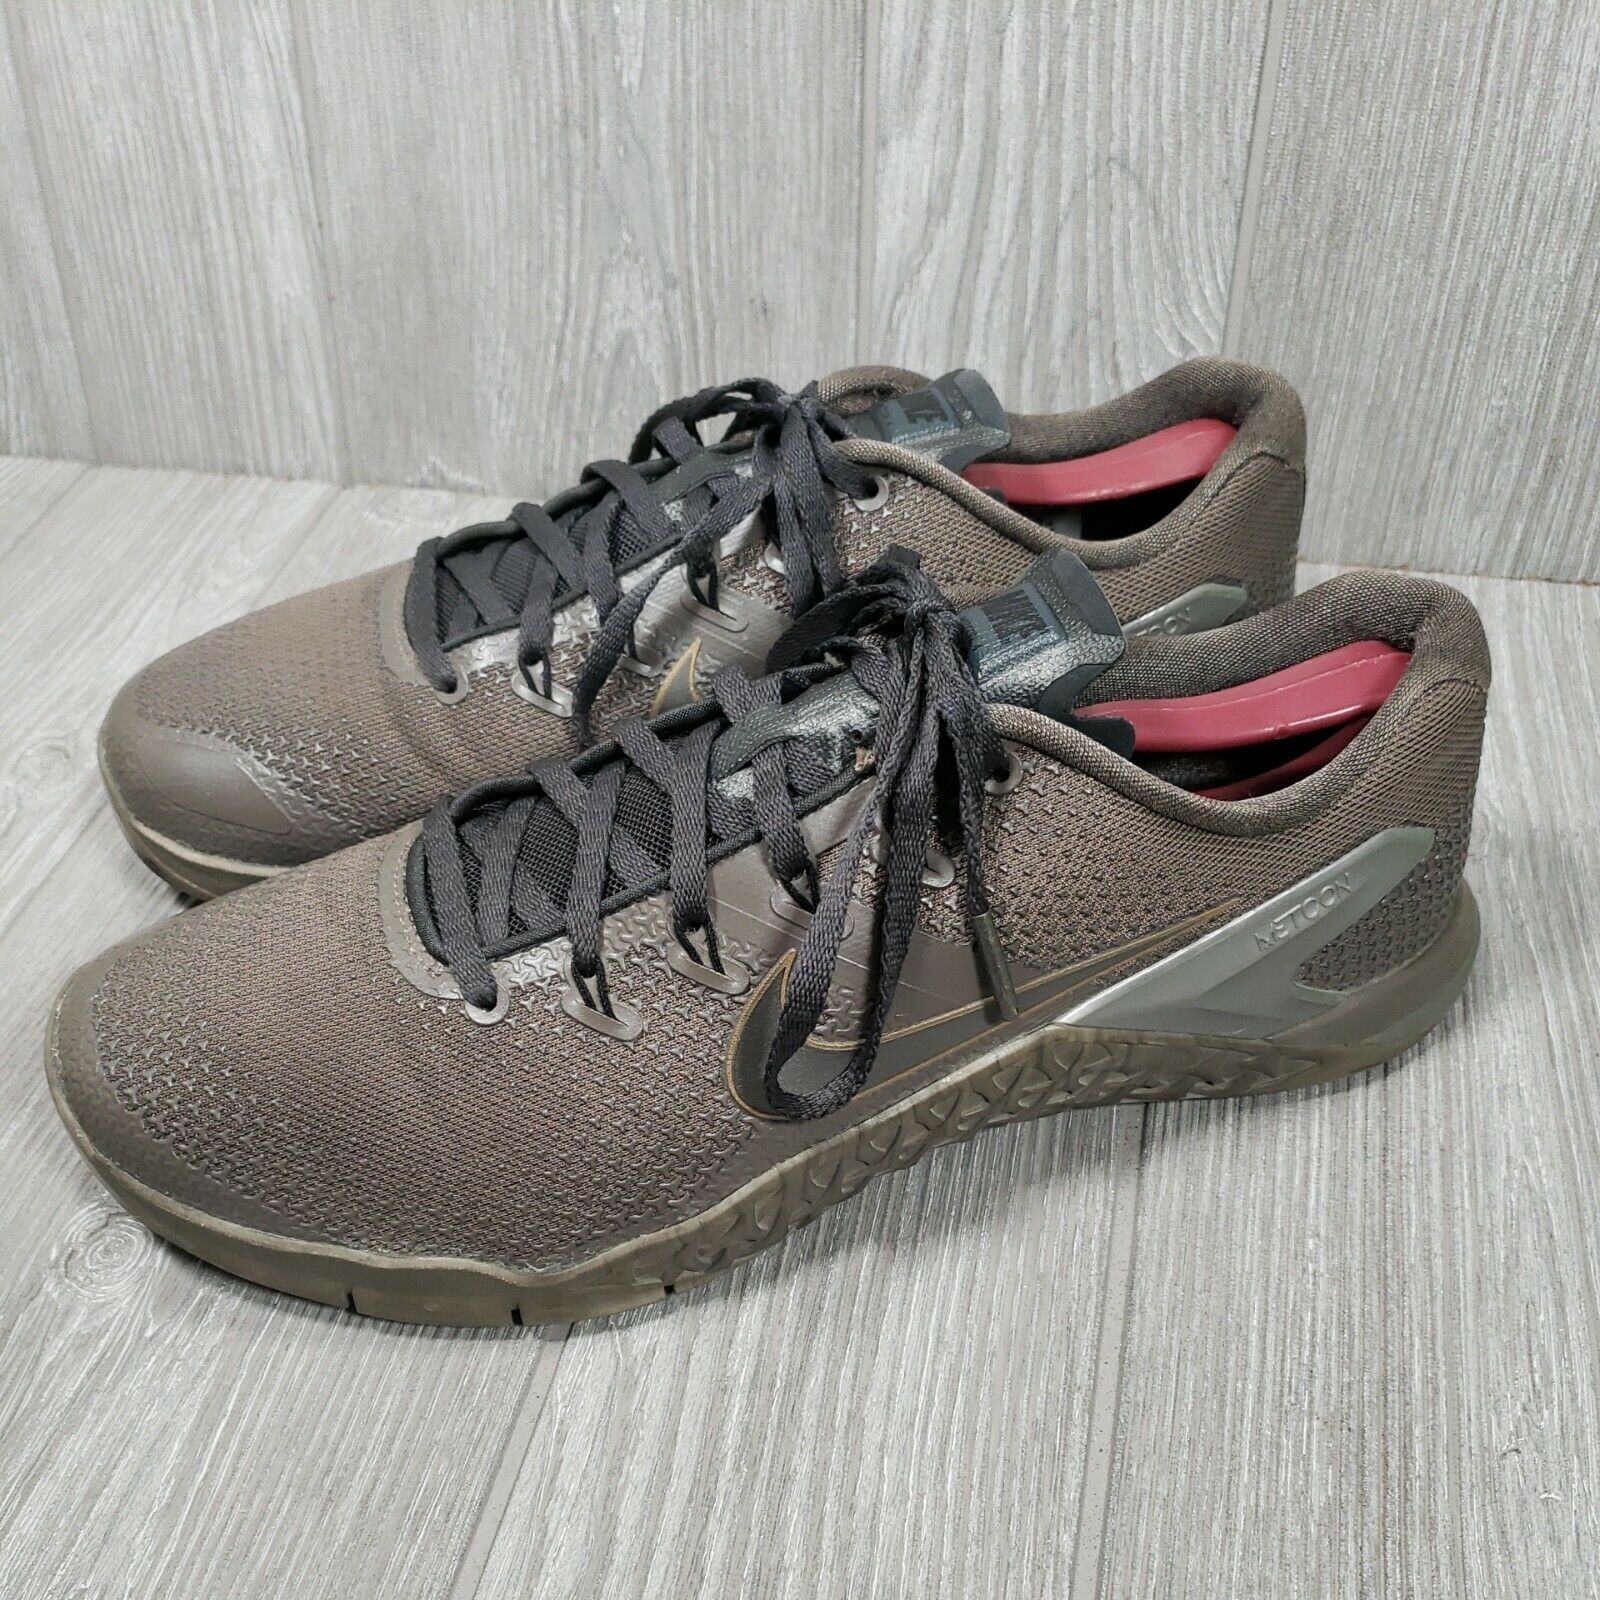 Nike Metcon 4 Viking Quest Ridgerock Crossfit Shoes AJ9276-200 Men Size 9.5